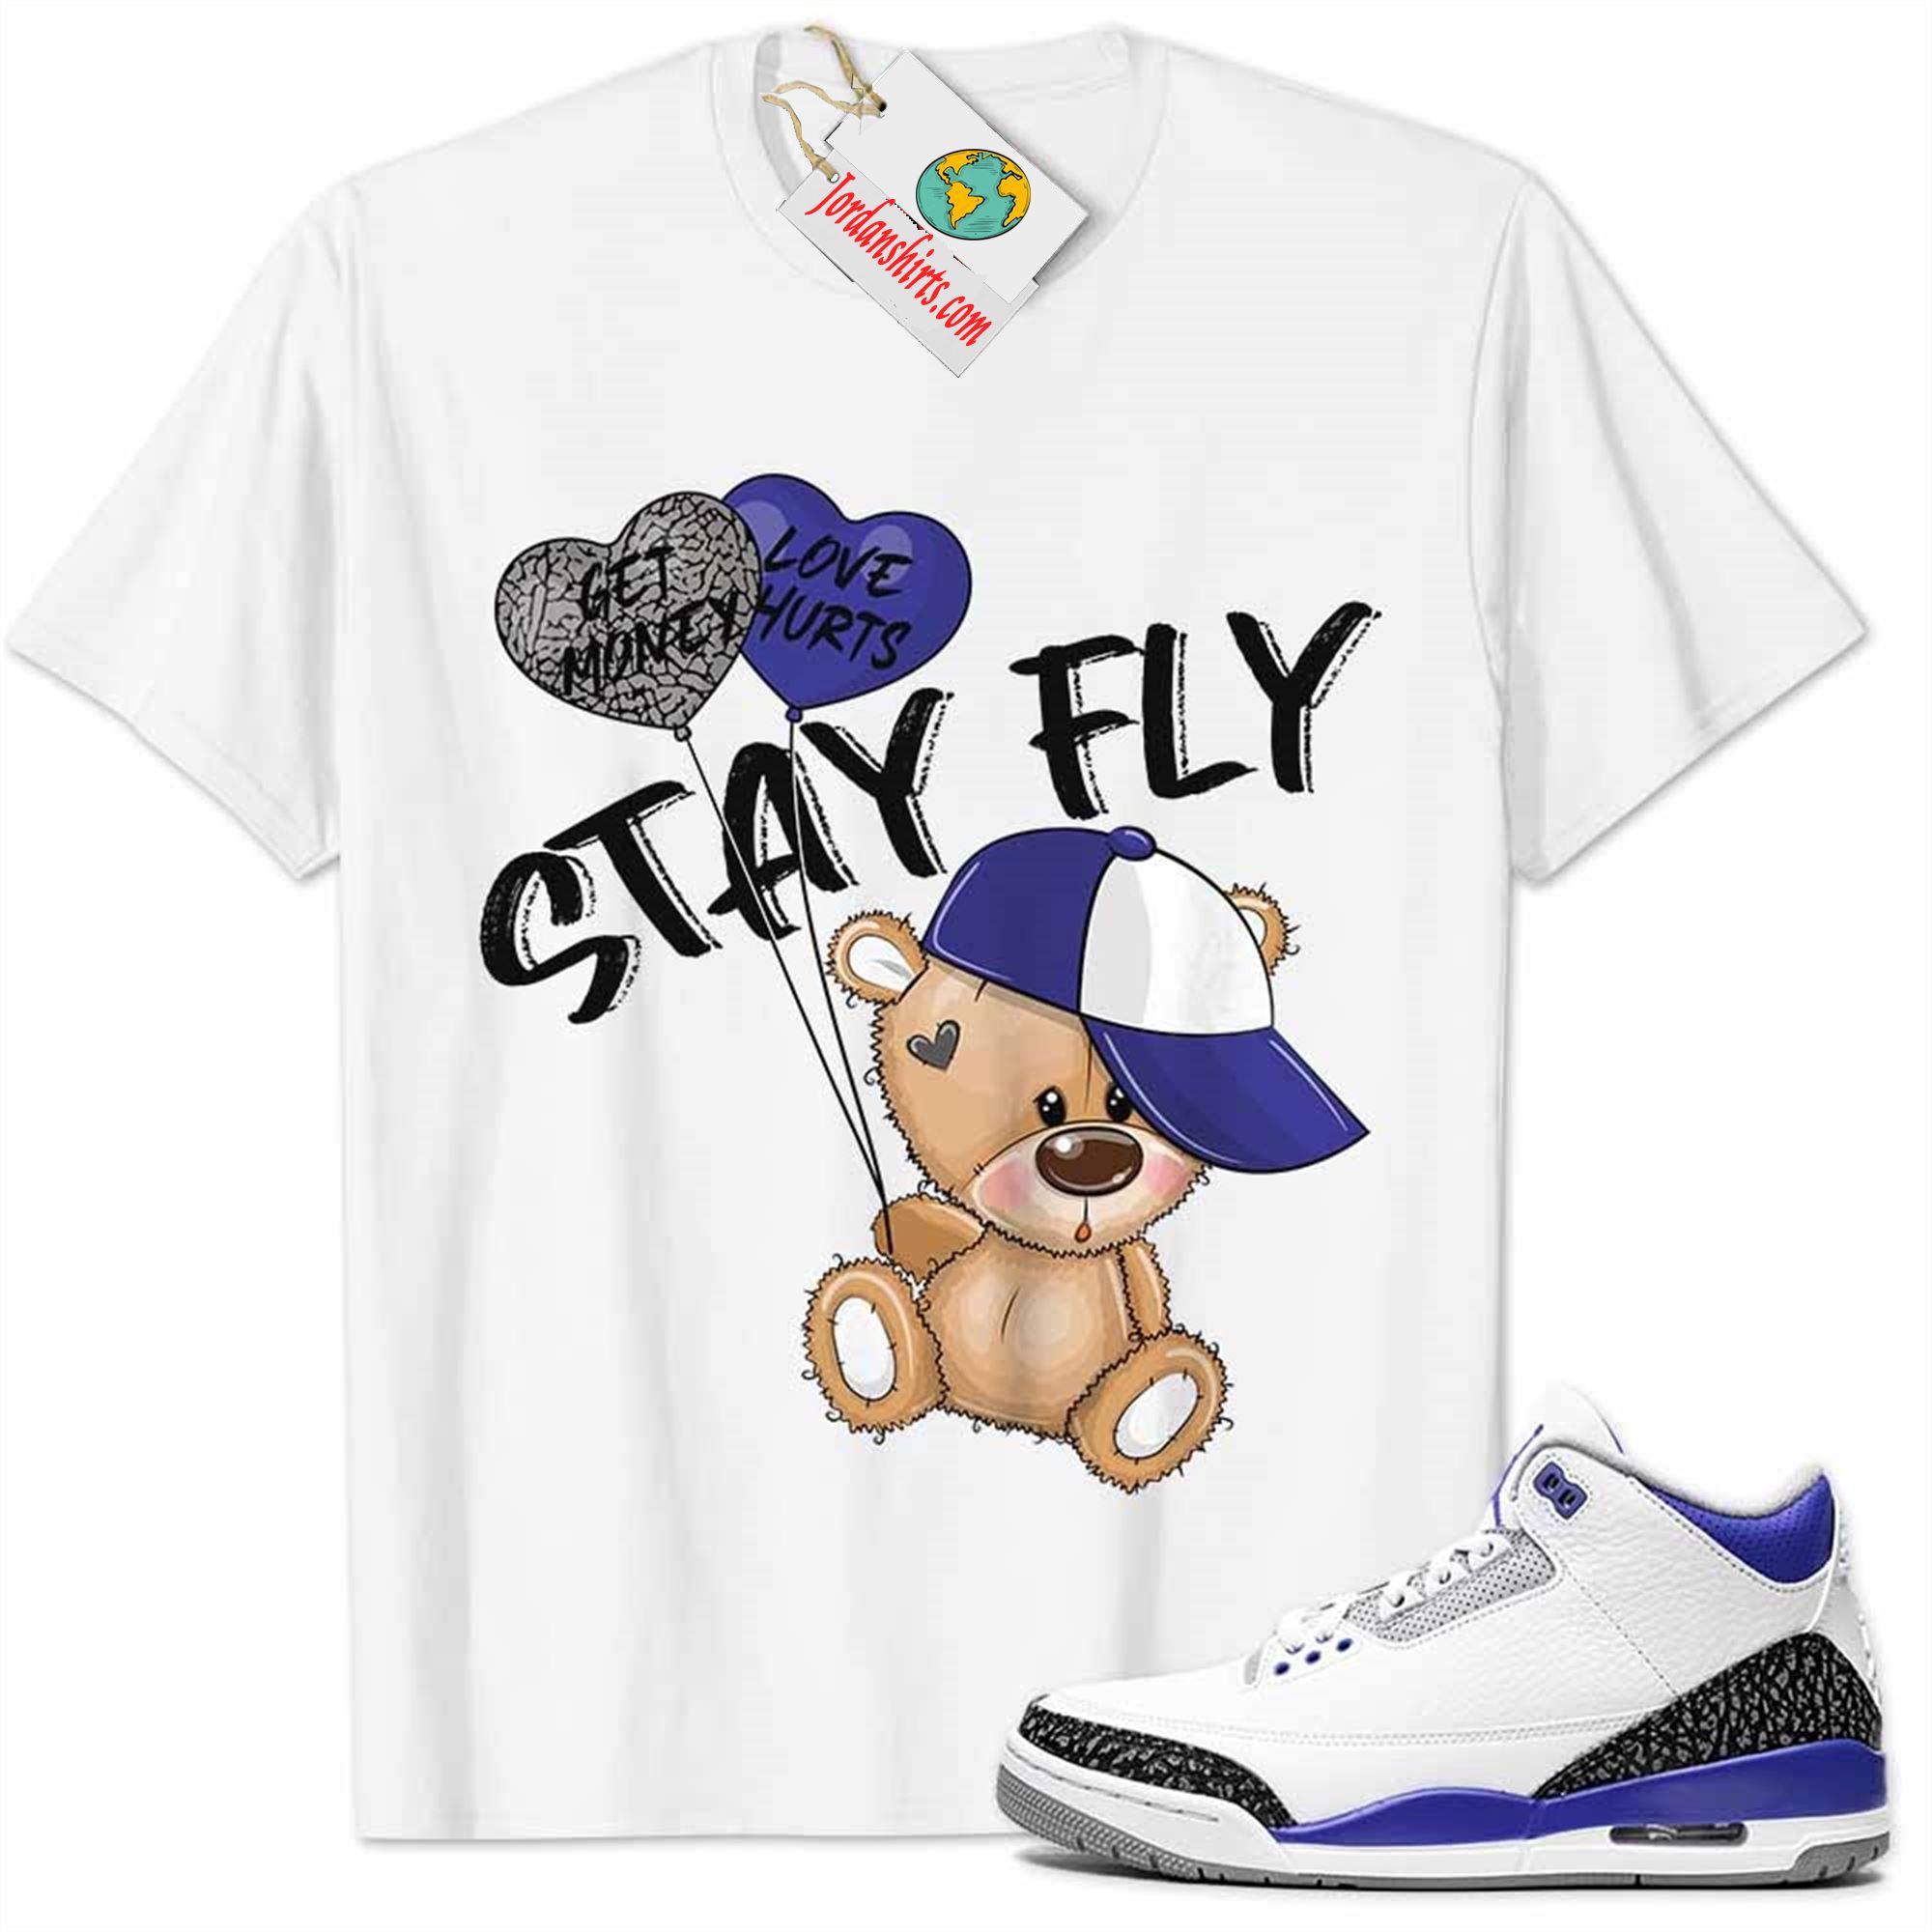 Jordan 3 Shirt, Racer Blue 3s Shirt Cute Teddy Bear Stay Fly Get Money White Size Up To 5xl